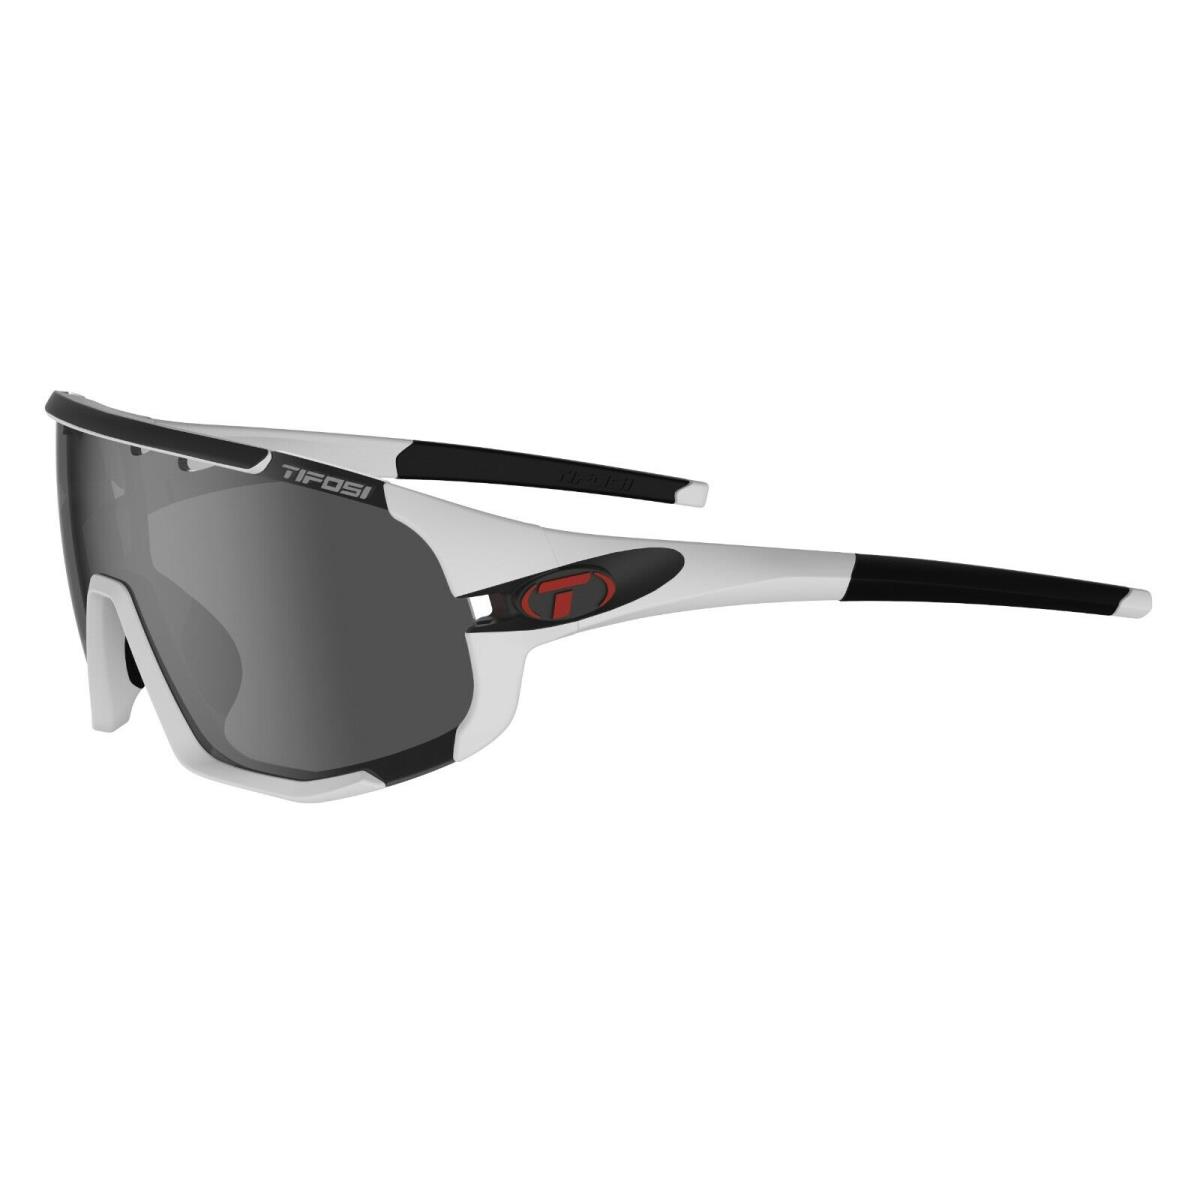 Tifosi Sledge Black White Orange Red Sunglasses Choose Your Style Matte White CYCLING 3-Lens